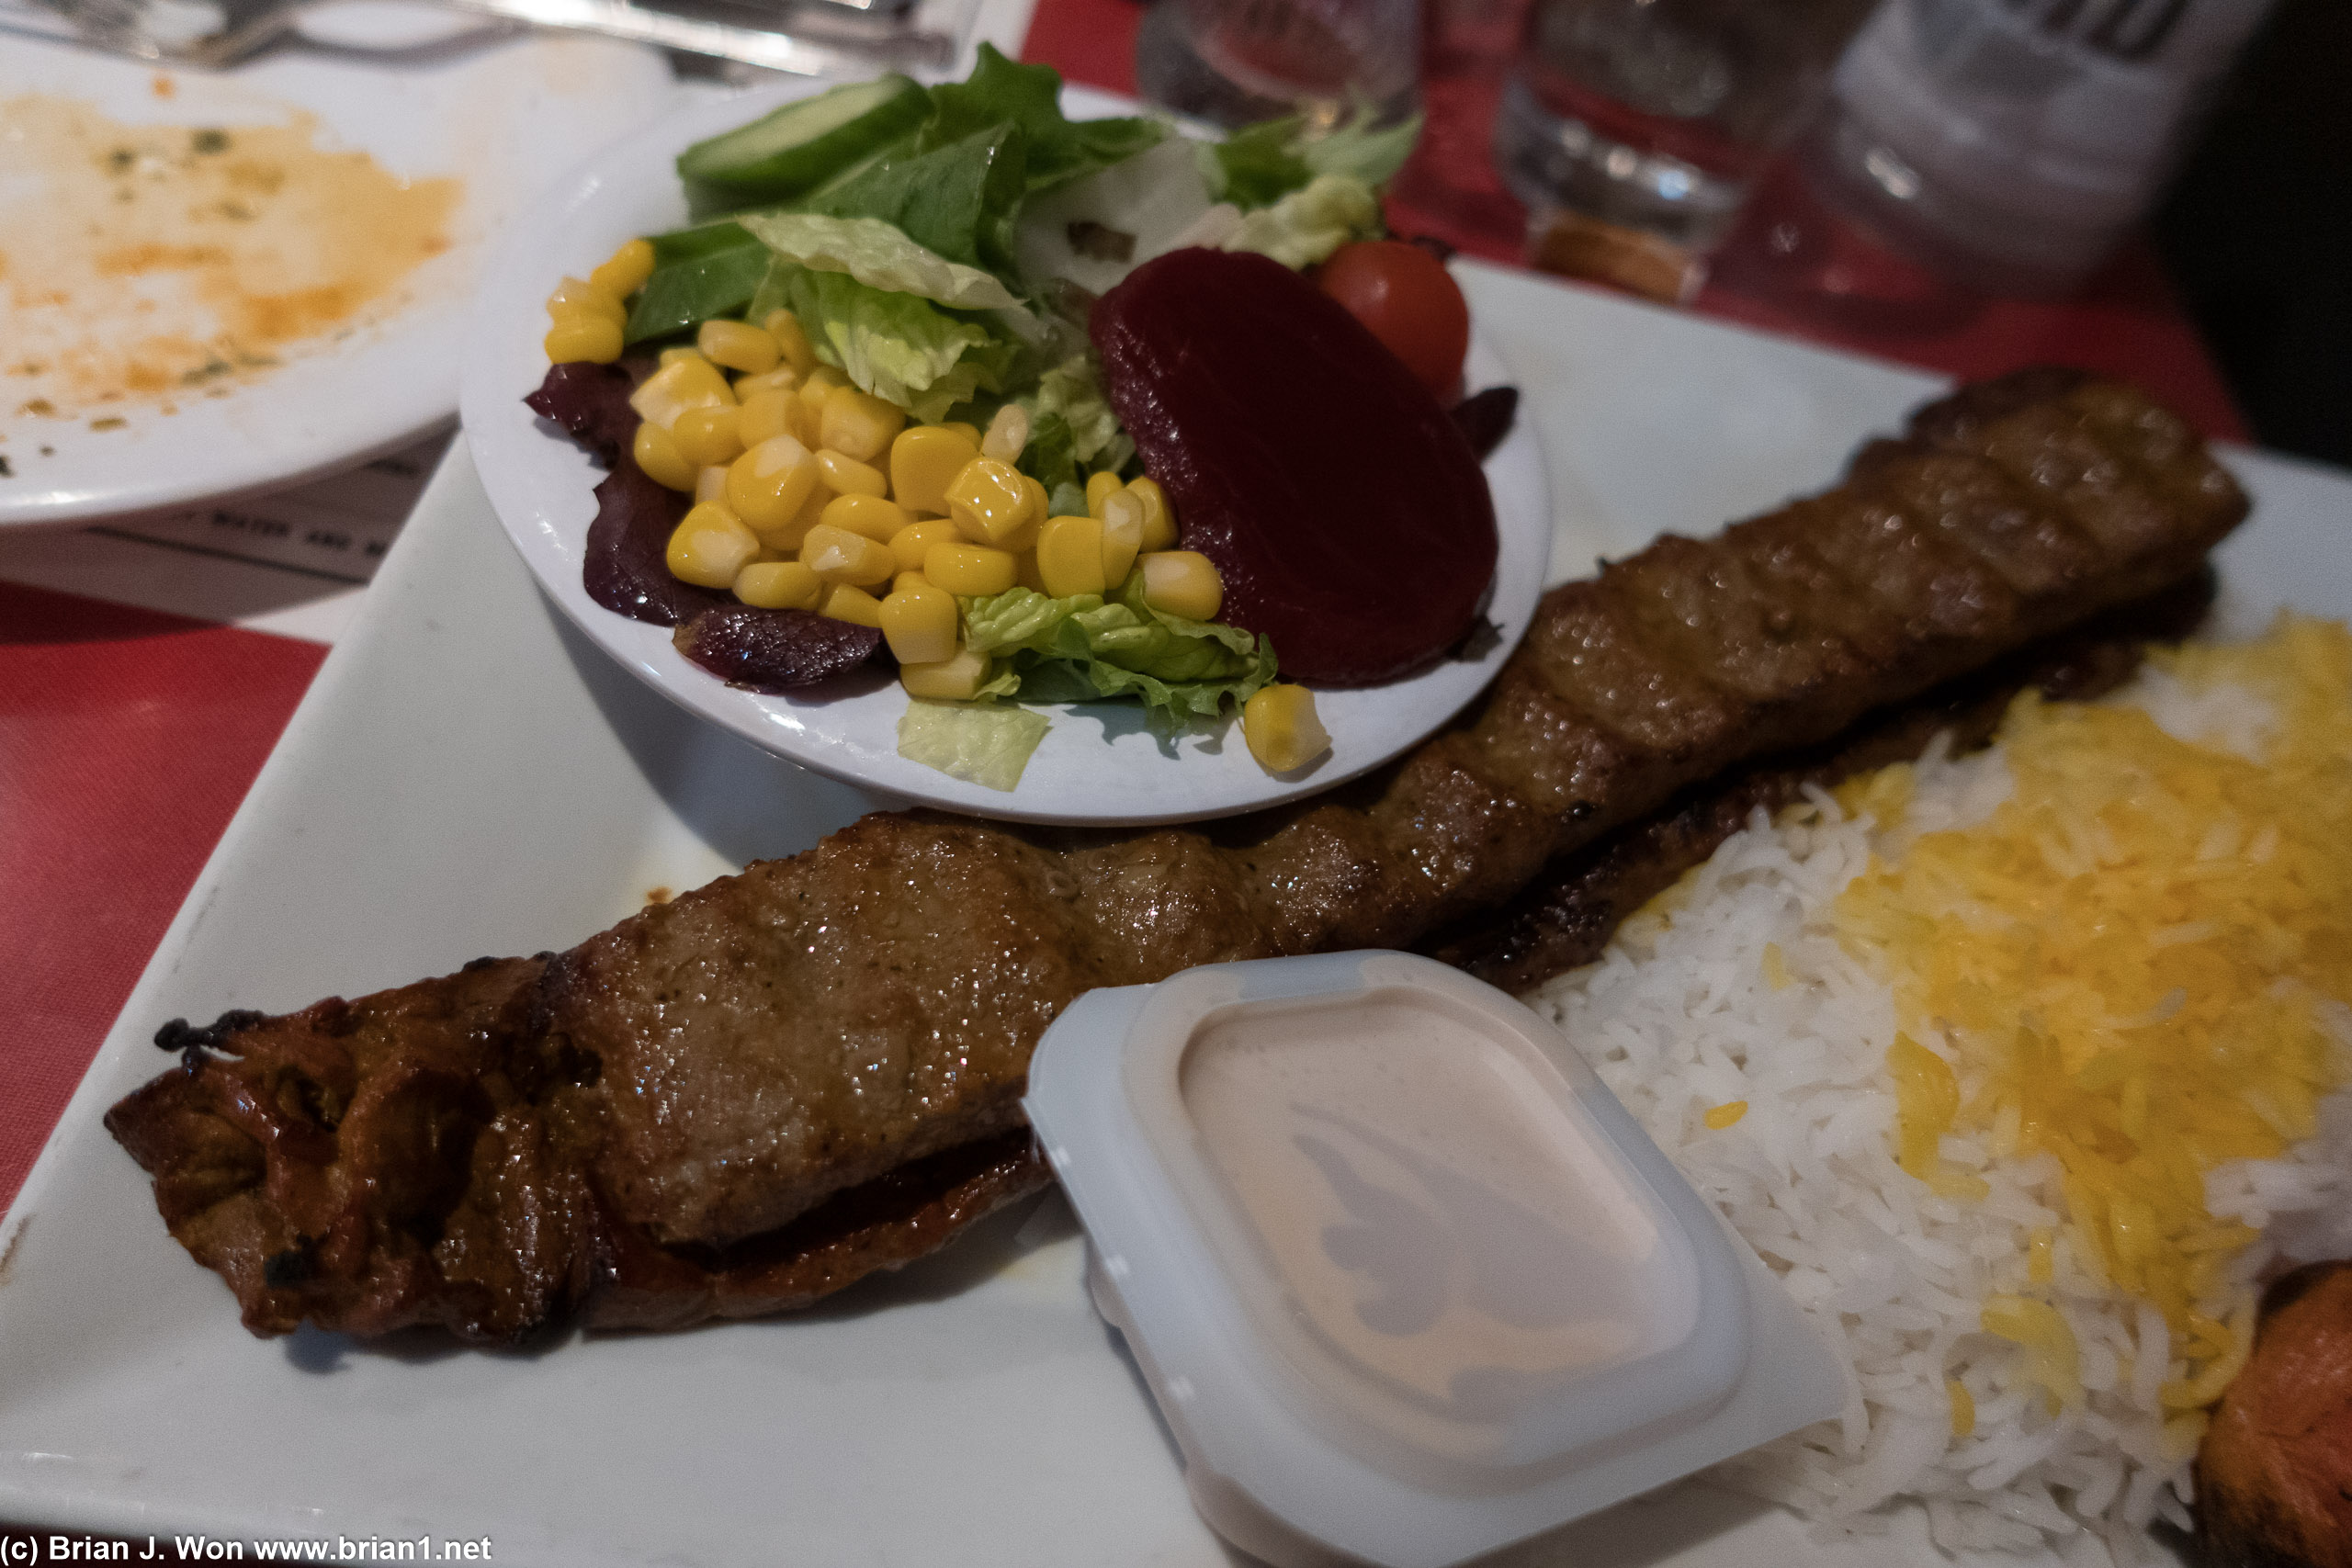 Beef barg and beef kobideh kebab combination. Not bad.